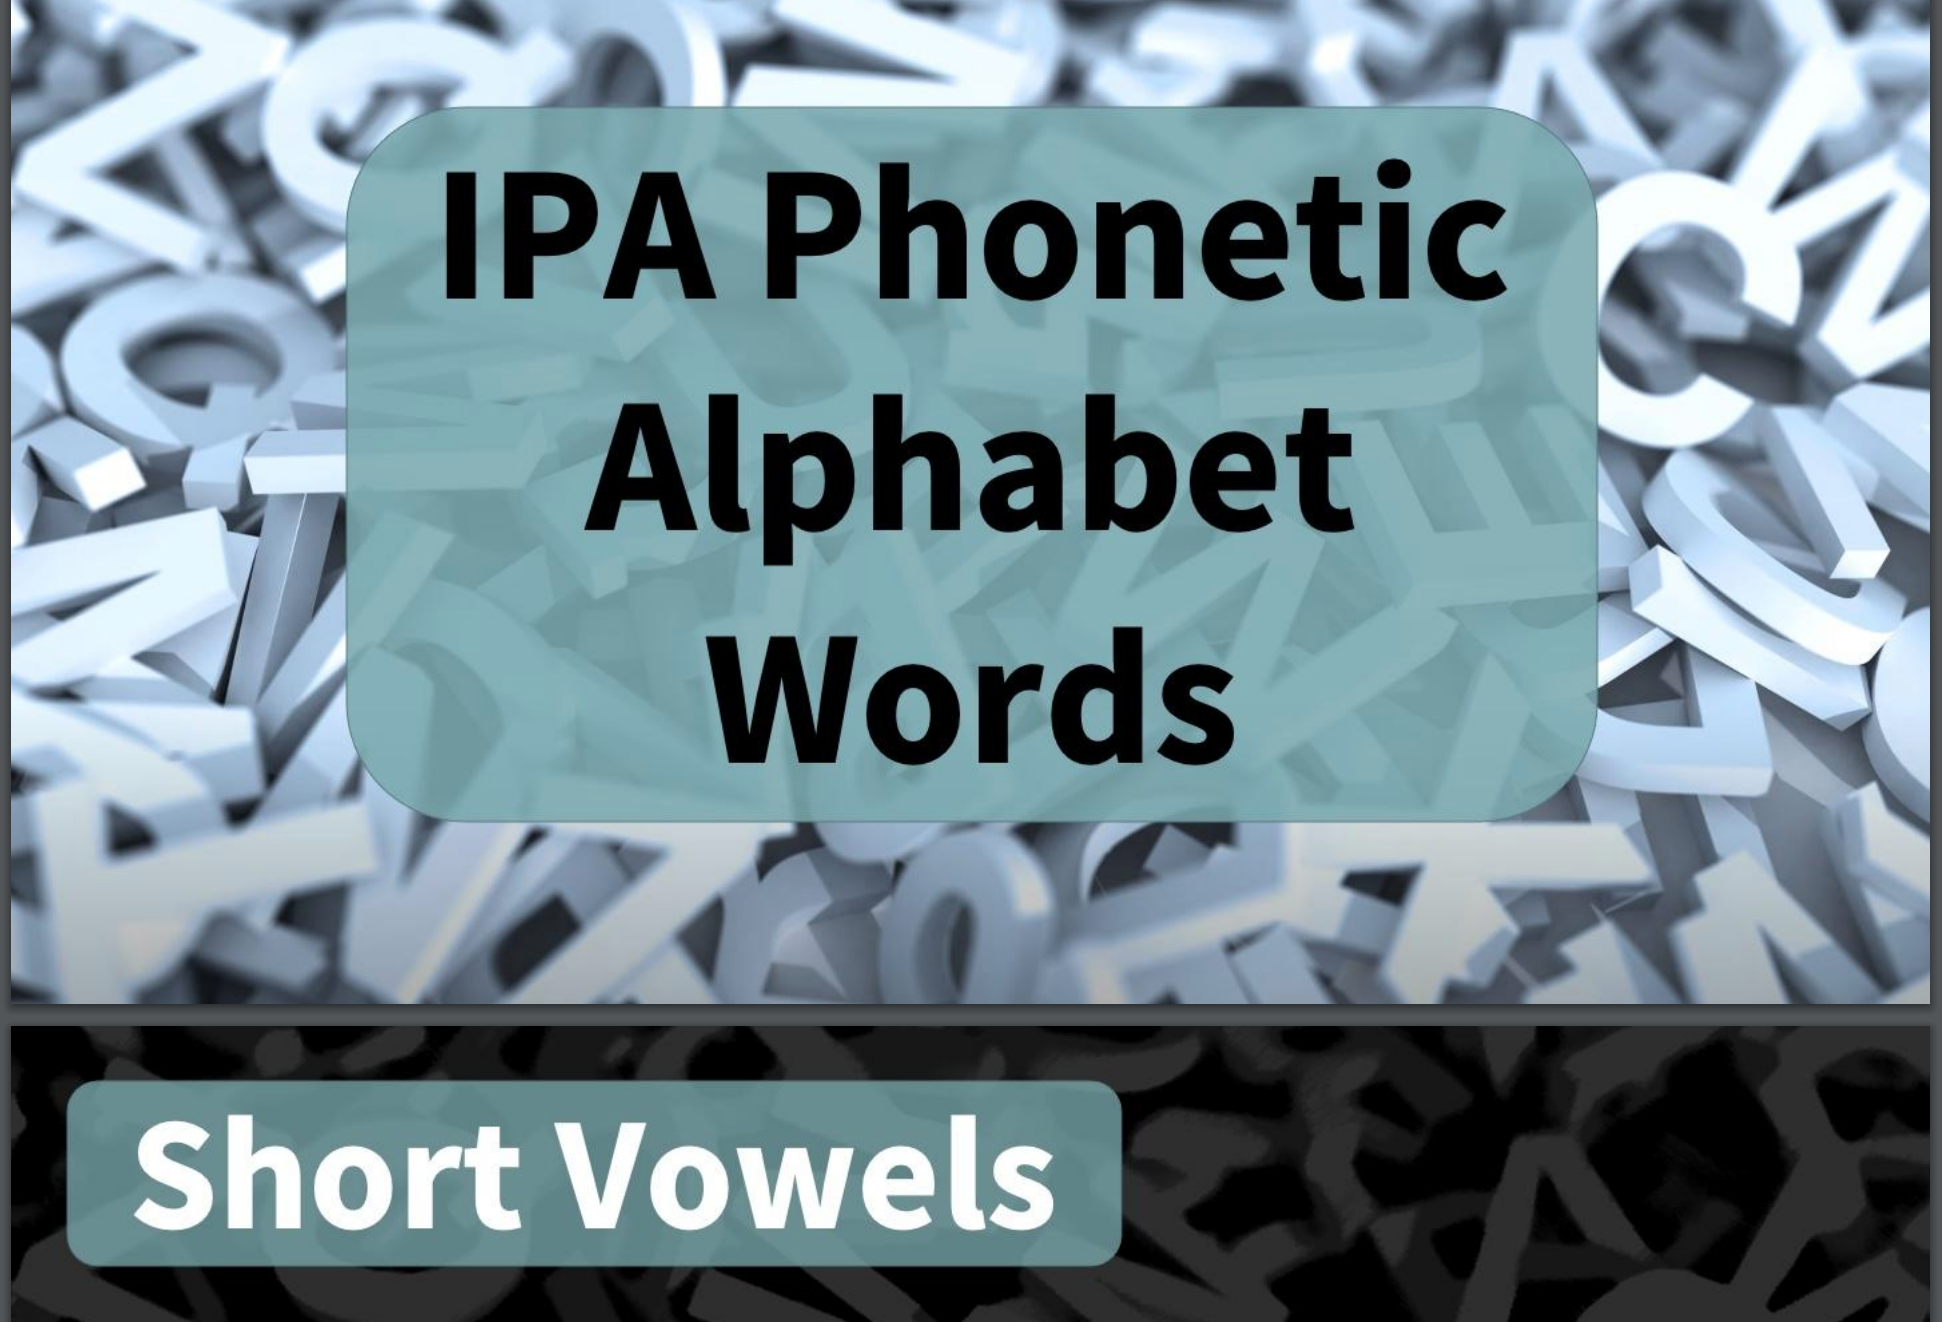 International Phonetic Alphabet Symbols With Example Words